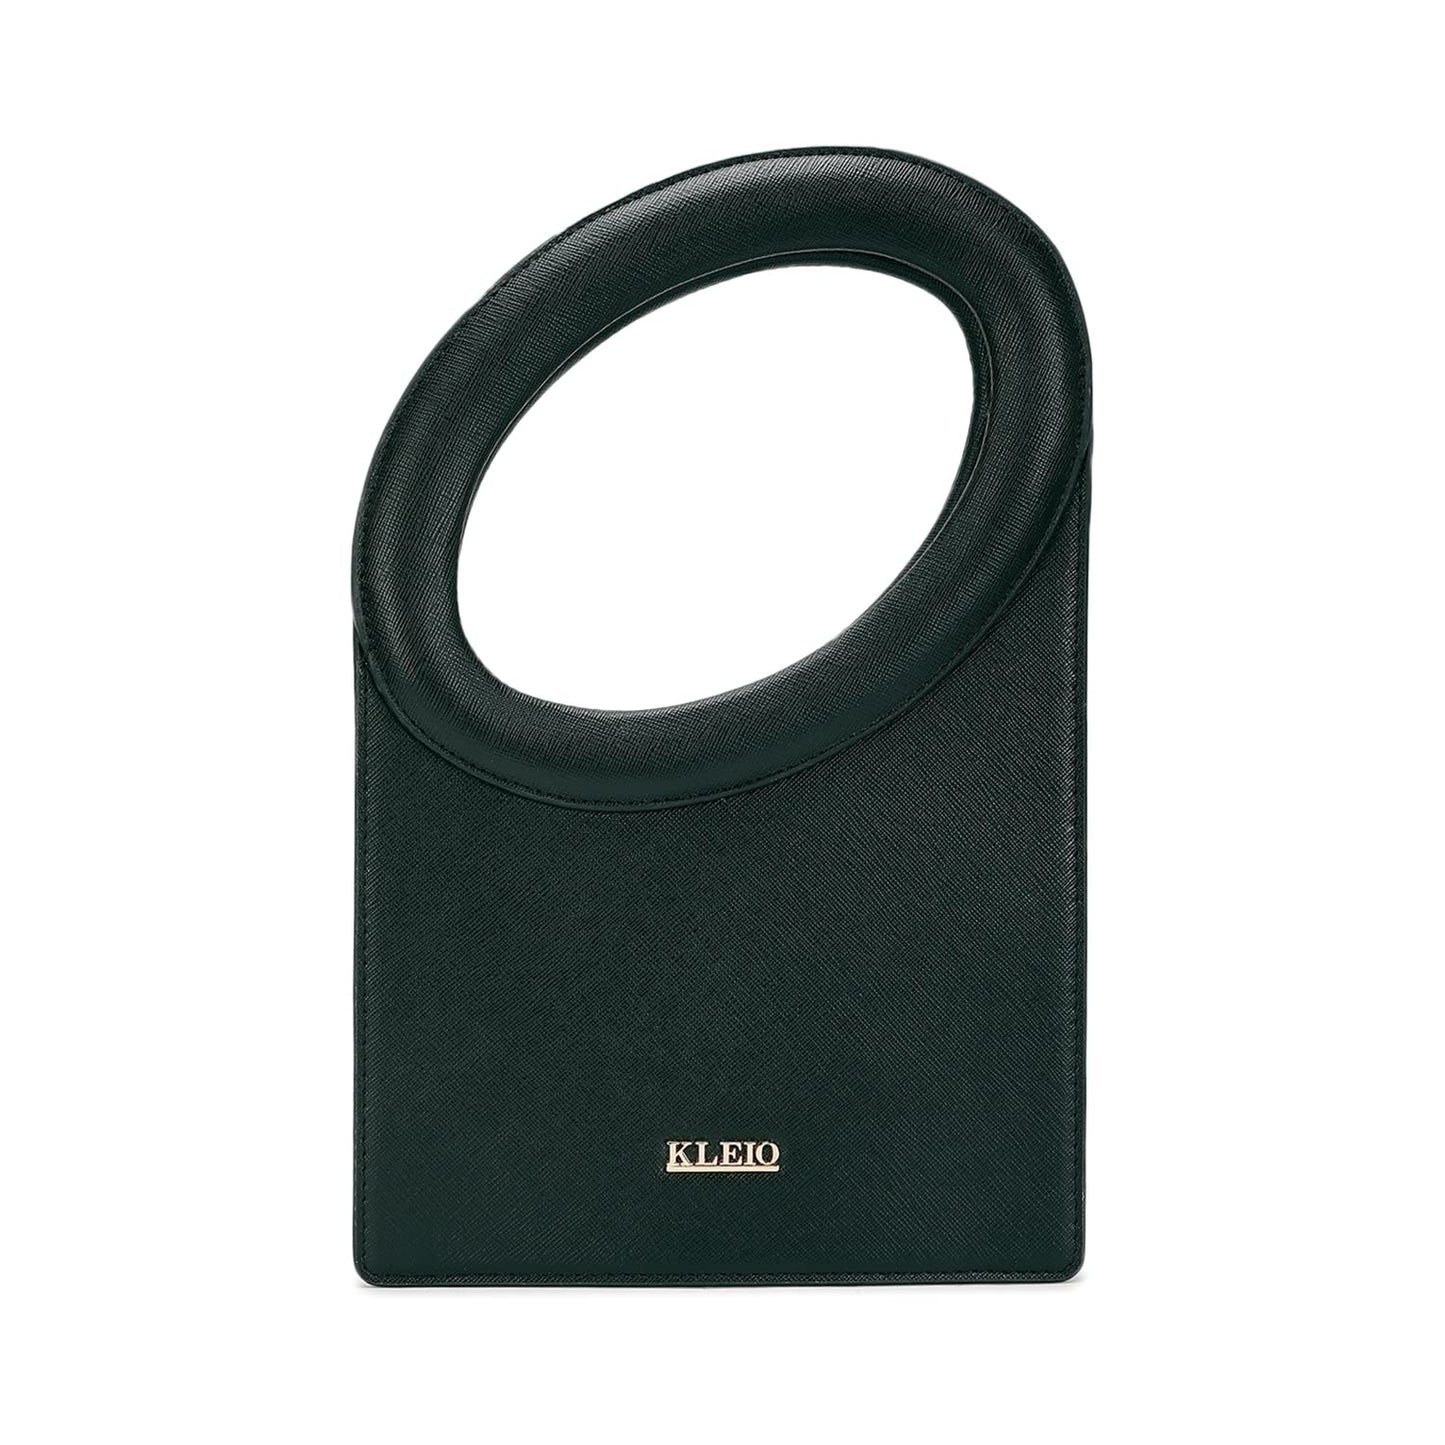 KLEIO Faux Leather Scupltural Shaped Top Handle Handbag with Detachable Sling for Women Ladies(HO9038KL-DG)(DARK GREEN)